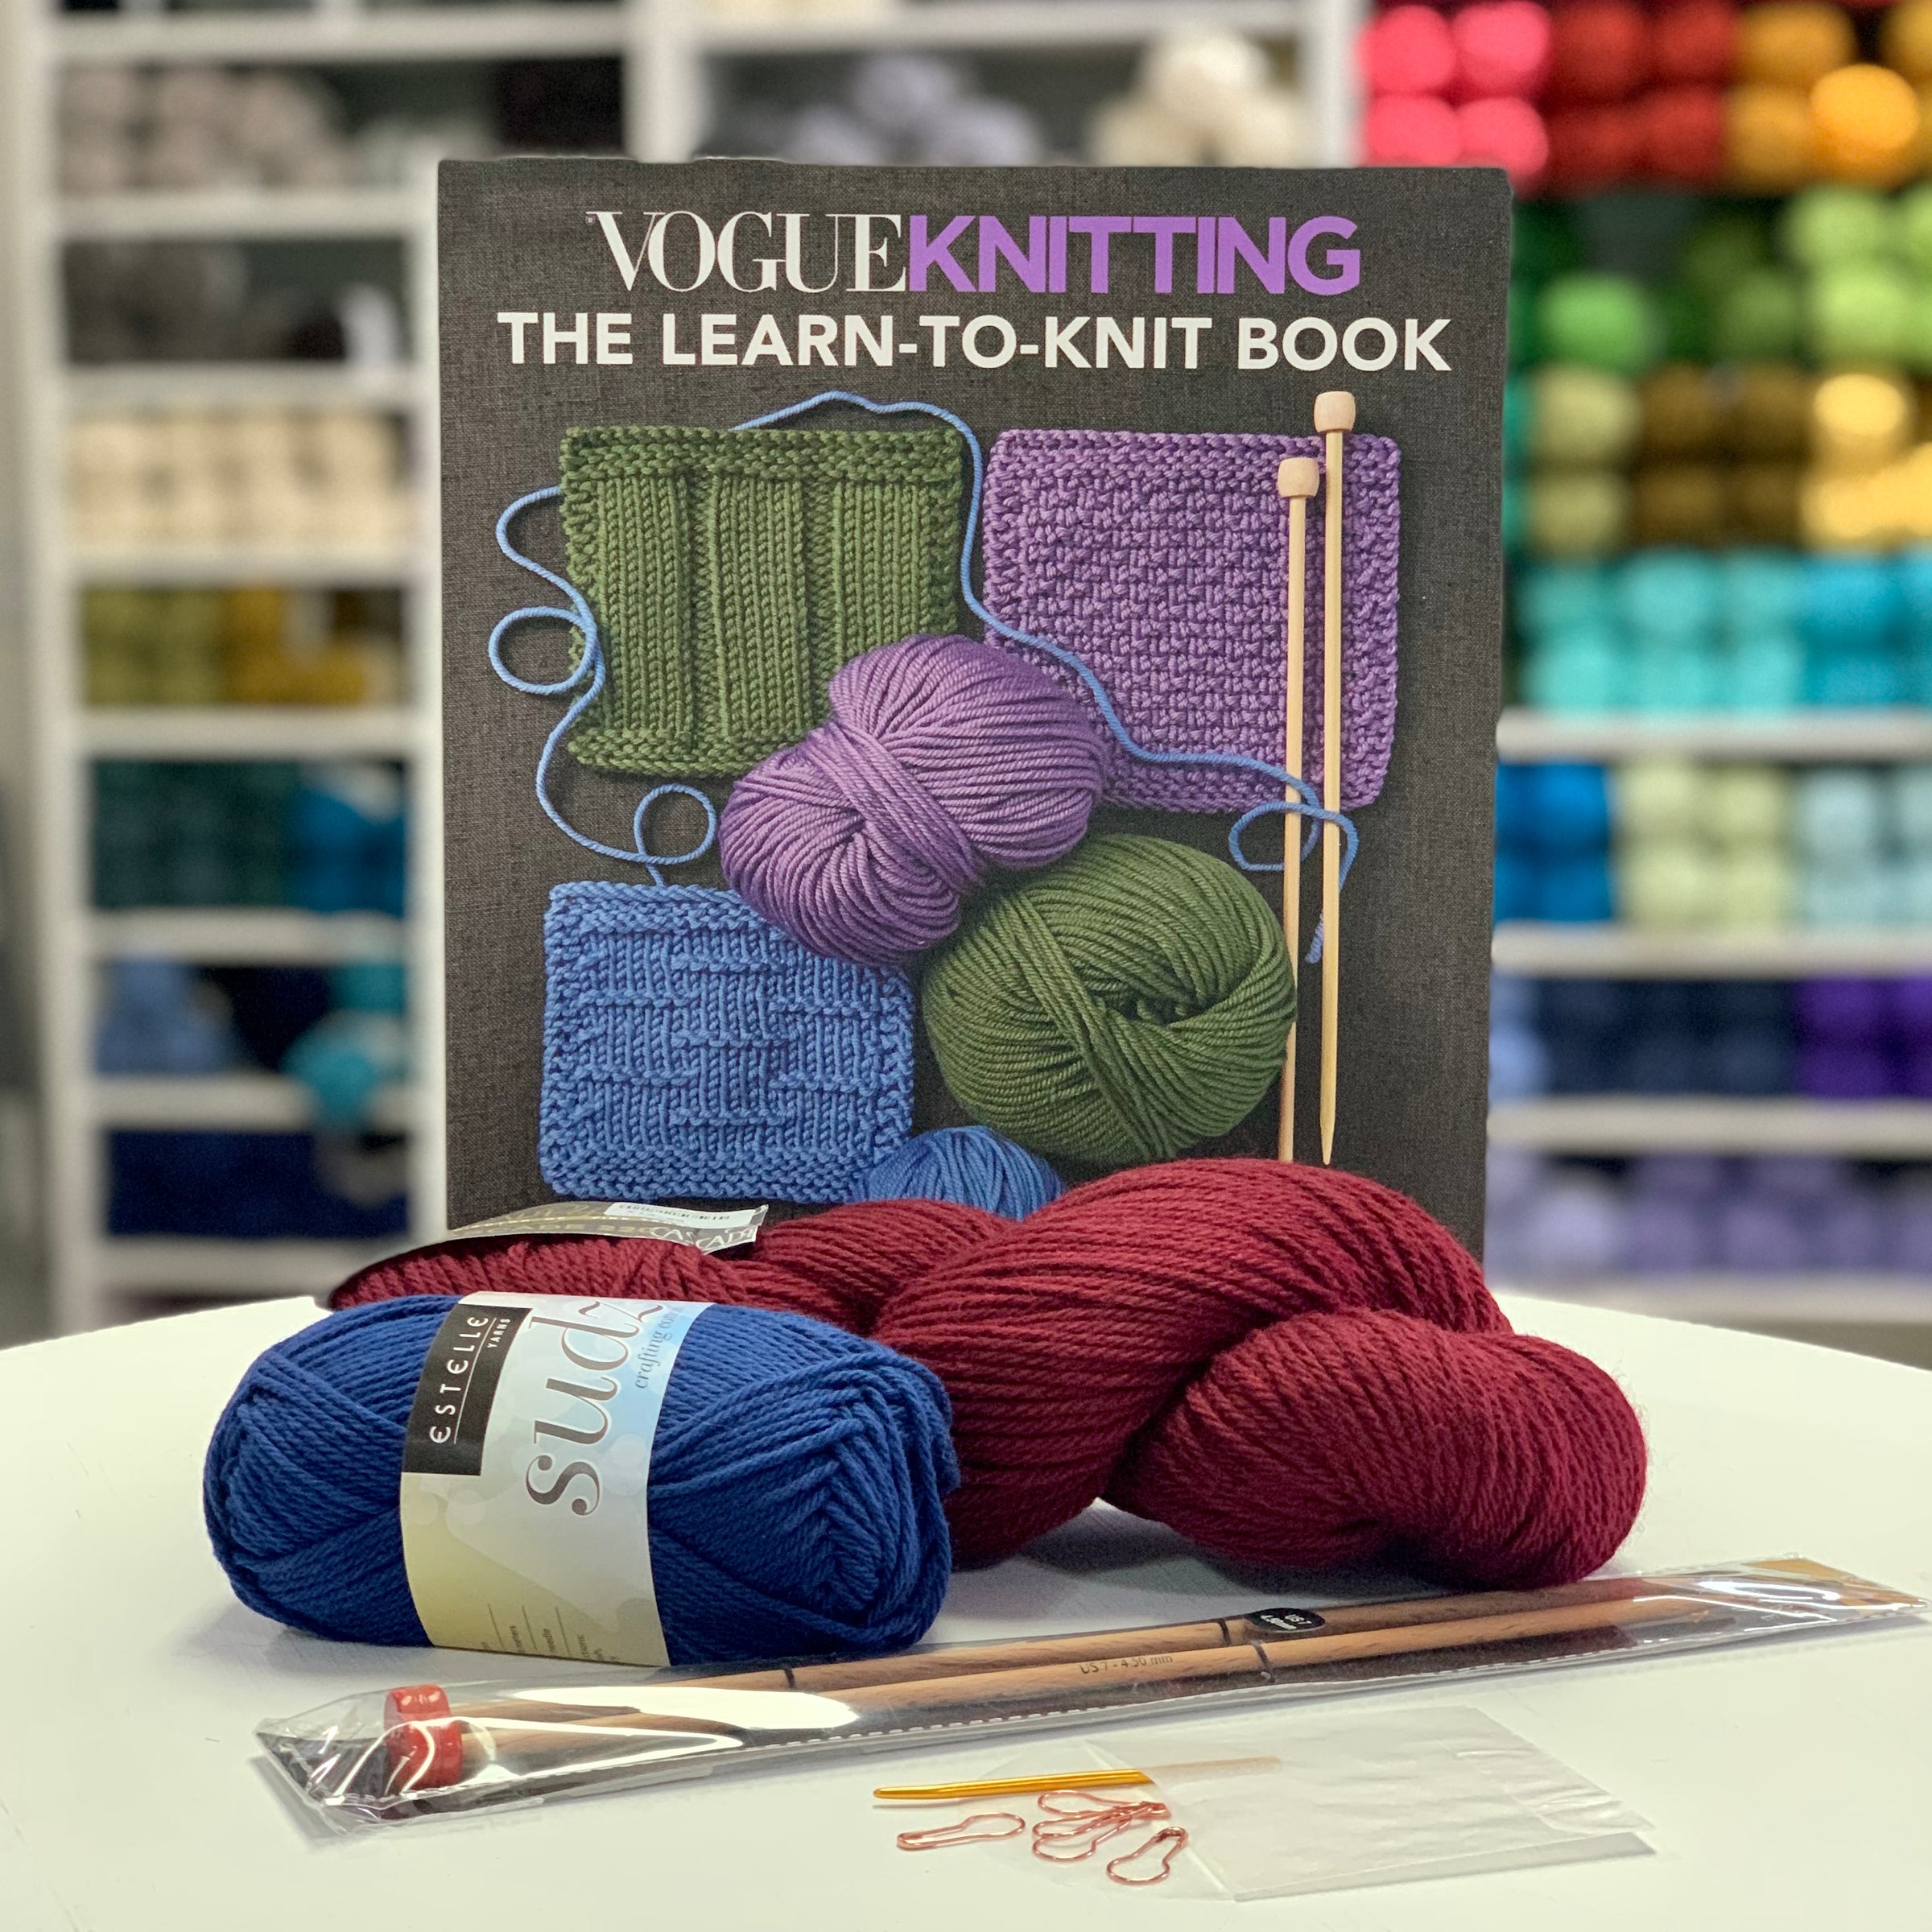 Sandnes Barn - Learn To Knit! Kit – The Knitting Loft